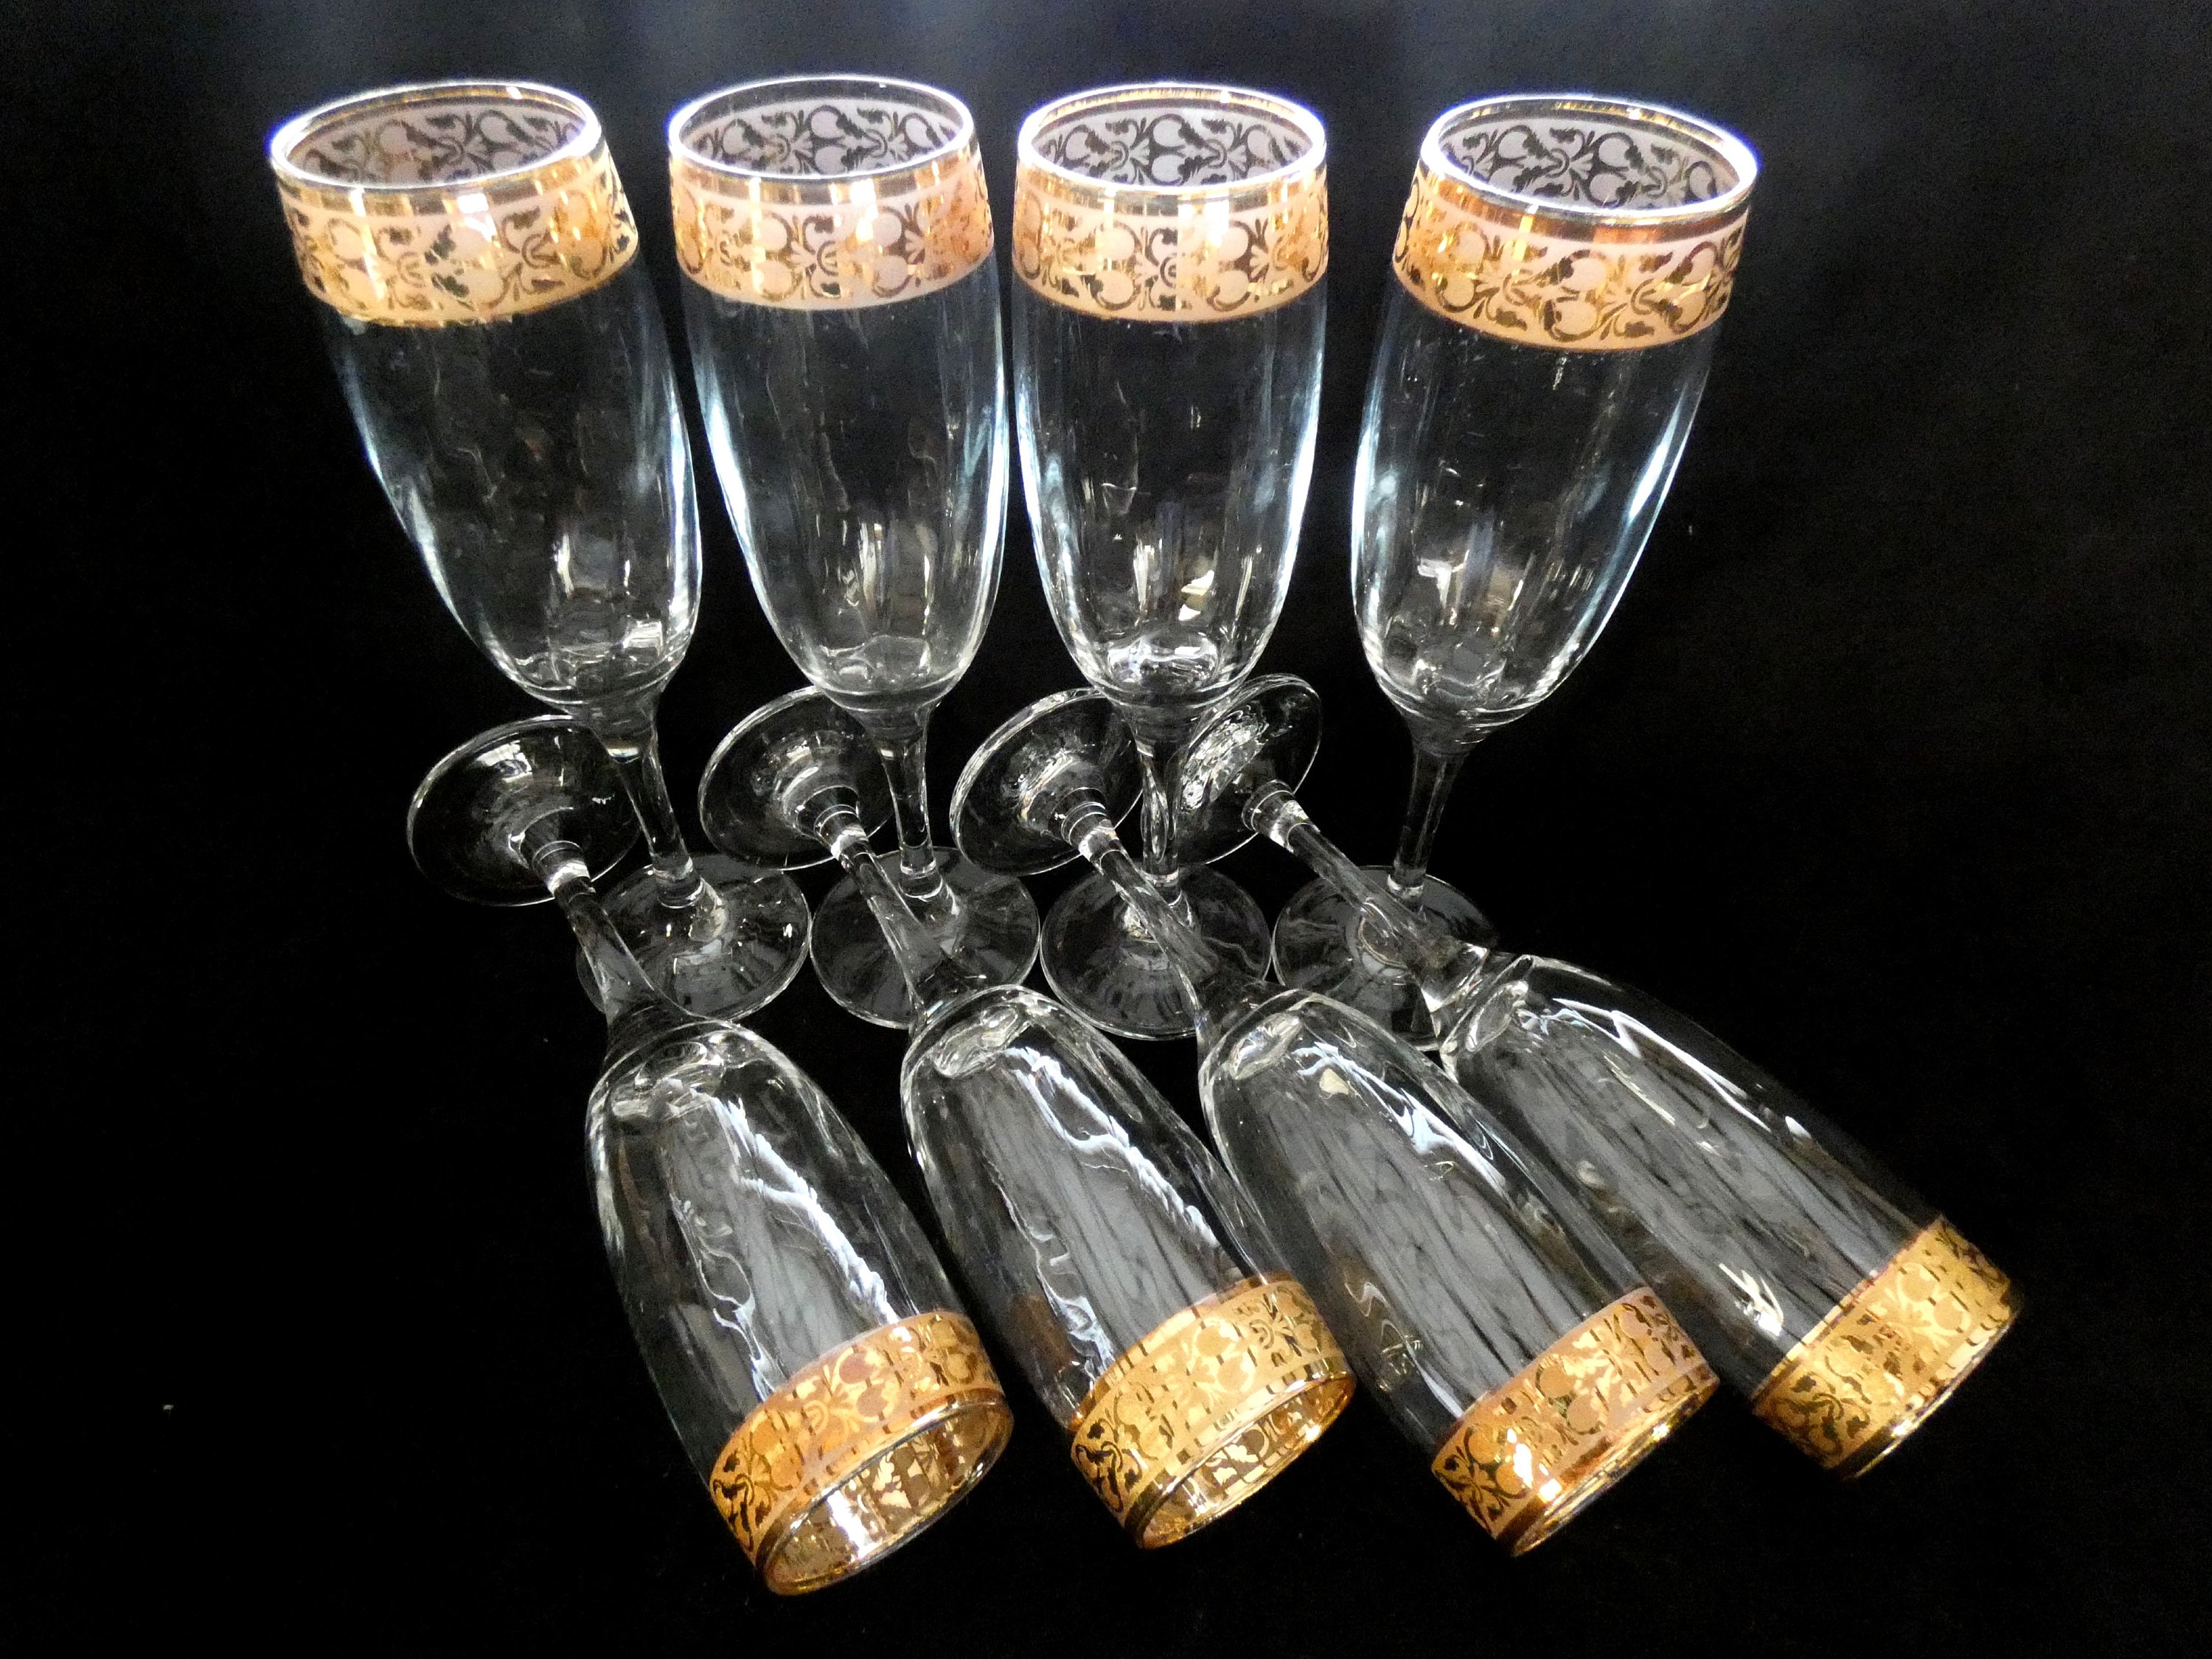 8 Vintage Crystal Champagne Flutes Italian Wine Glasses Gold Rimmed Wedding  Glassware Bar Cart Decor Accessories 70s